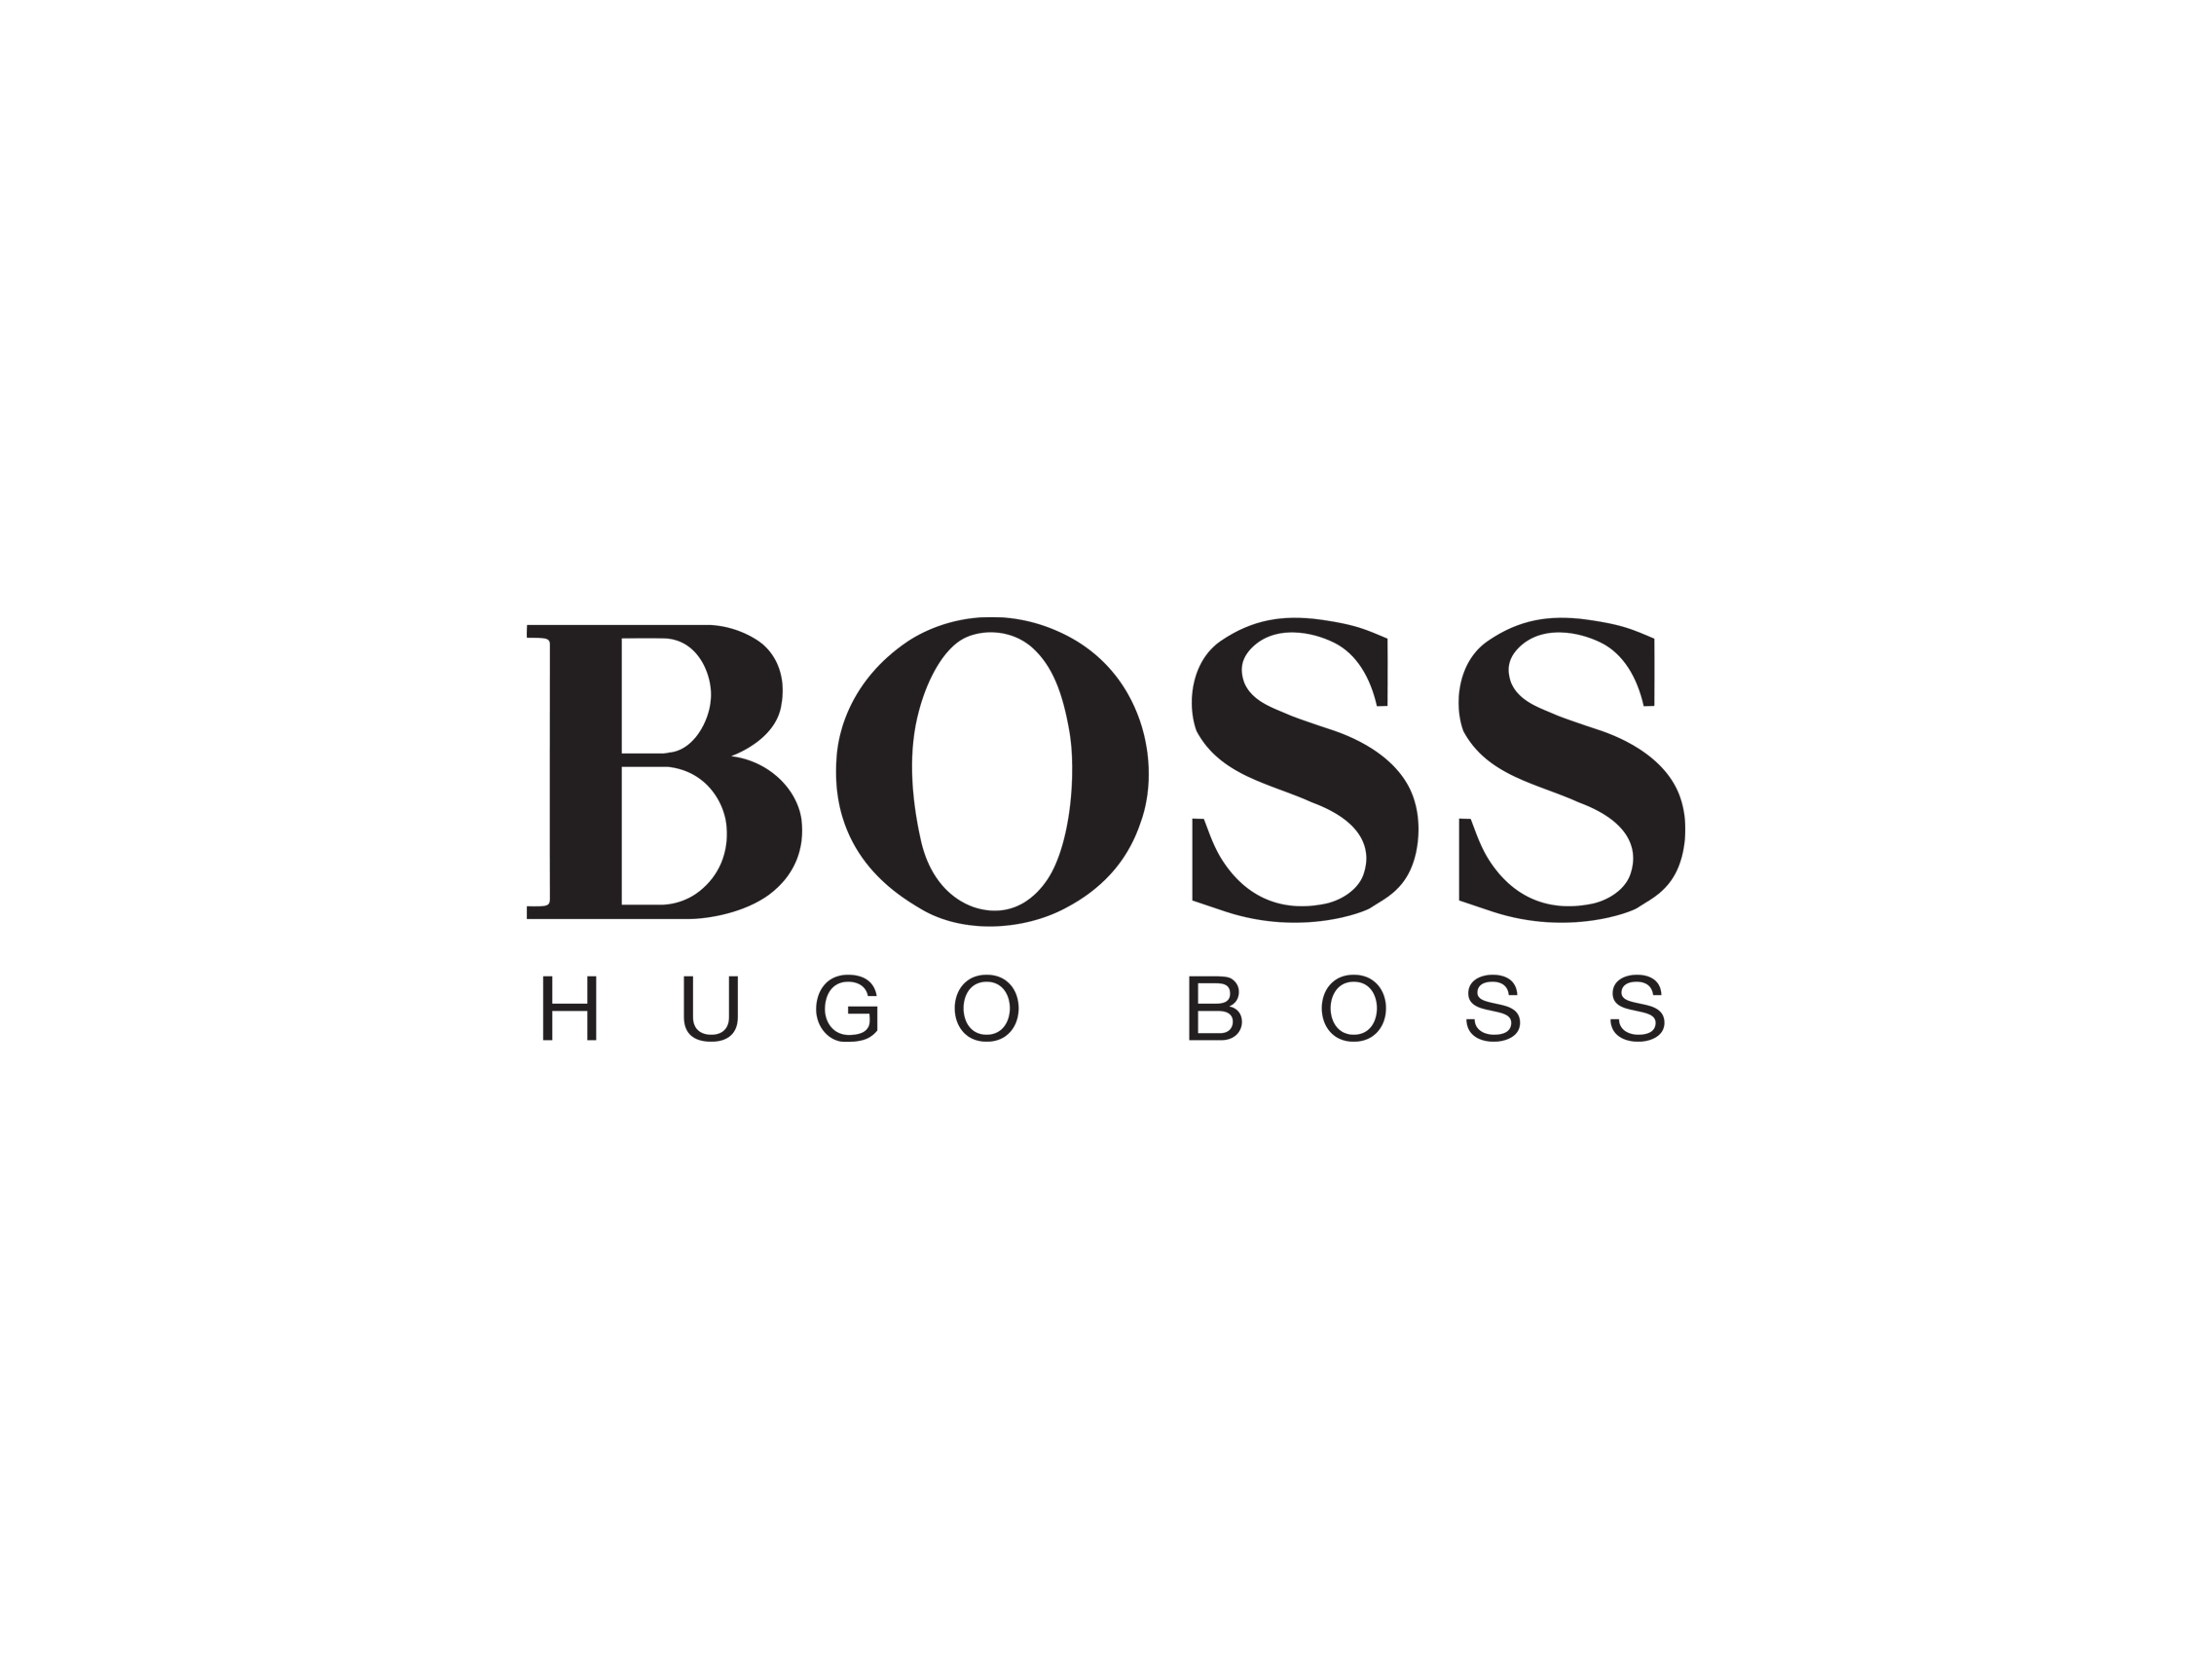 Hugo Boss Wallpapers